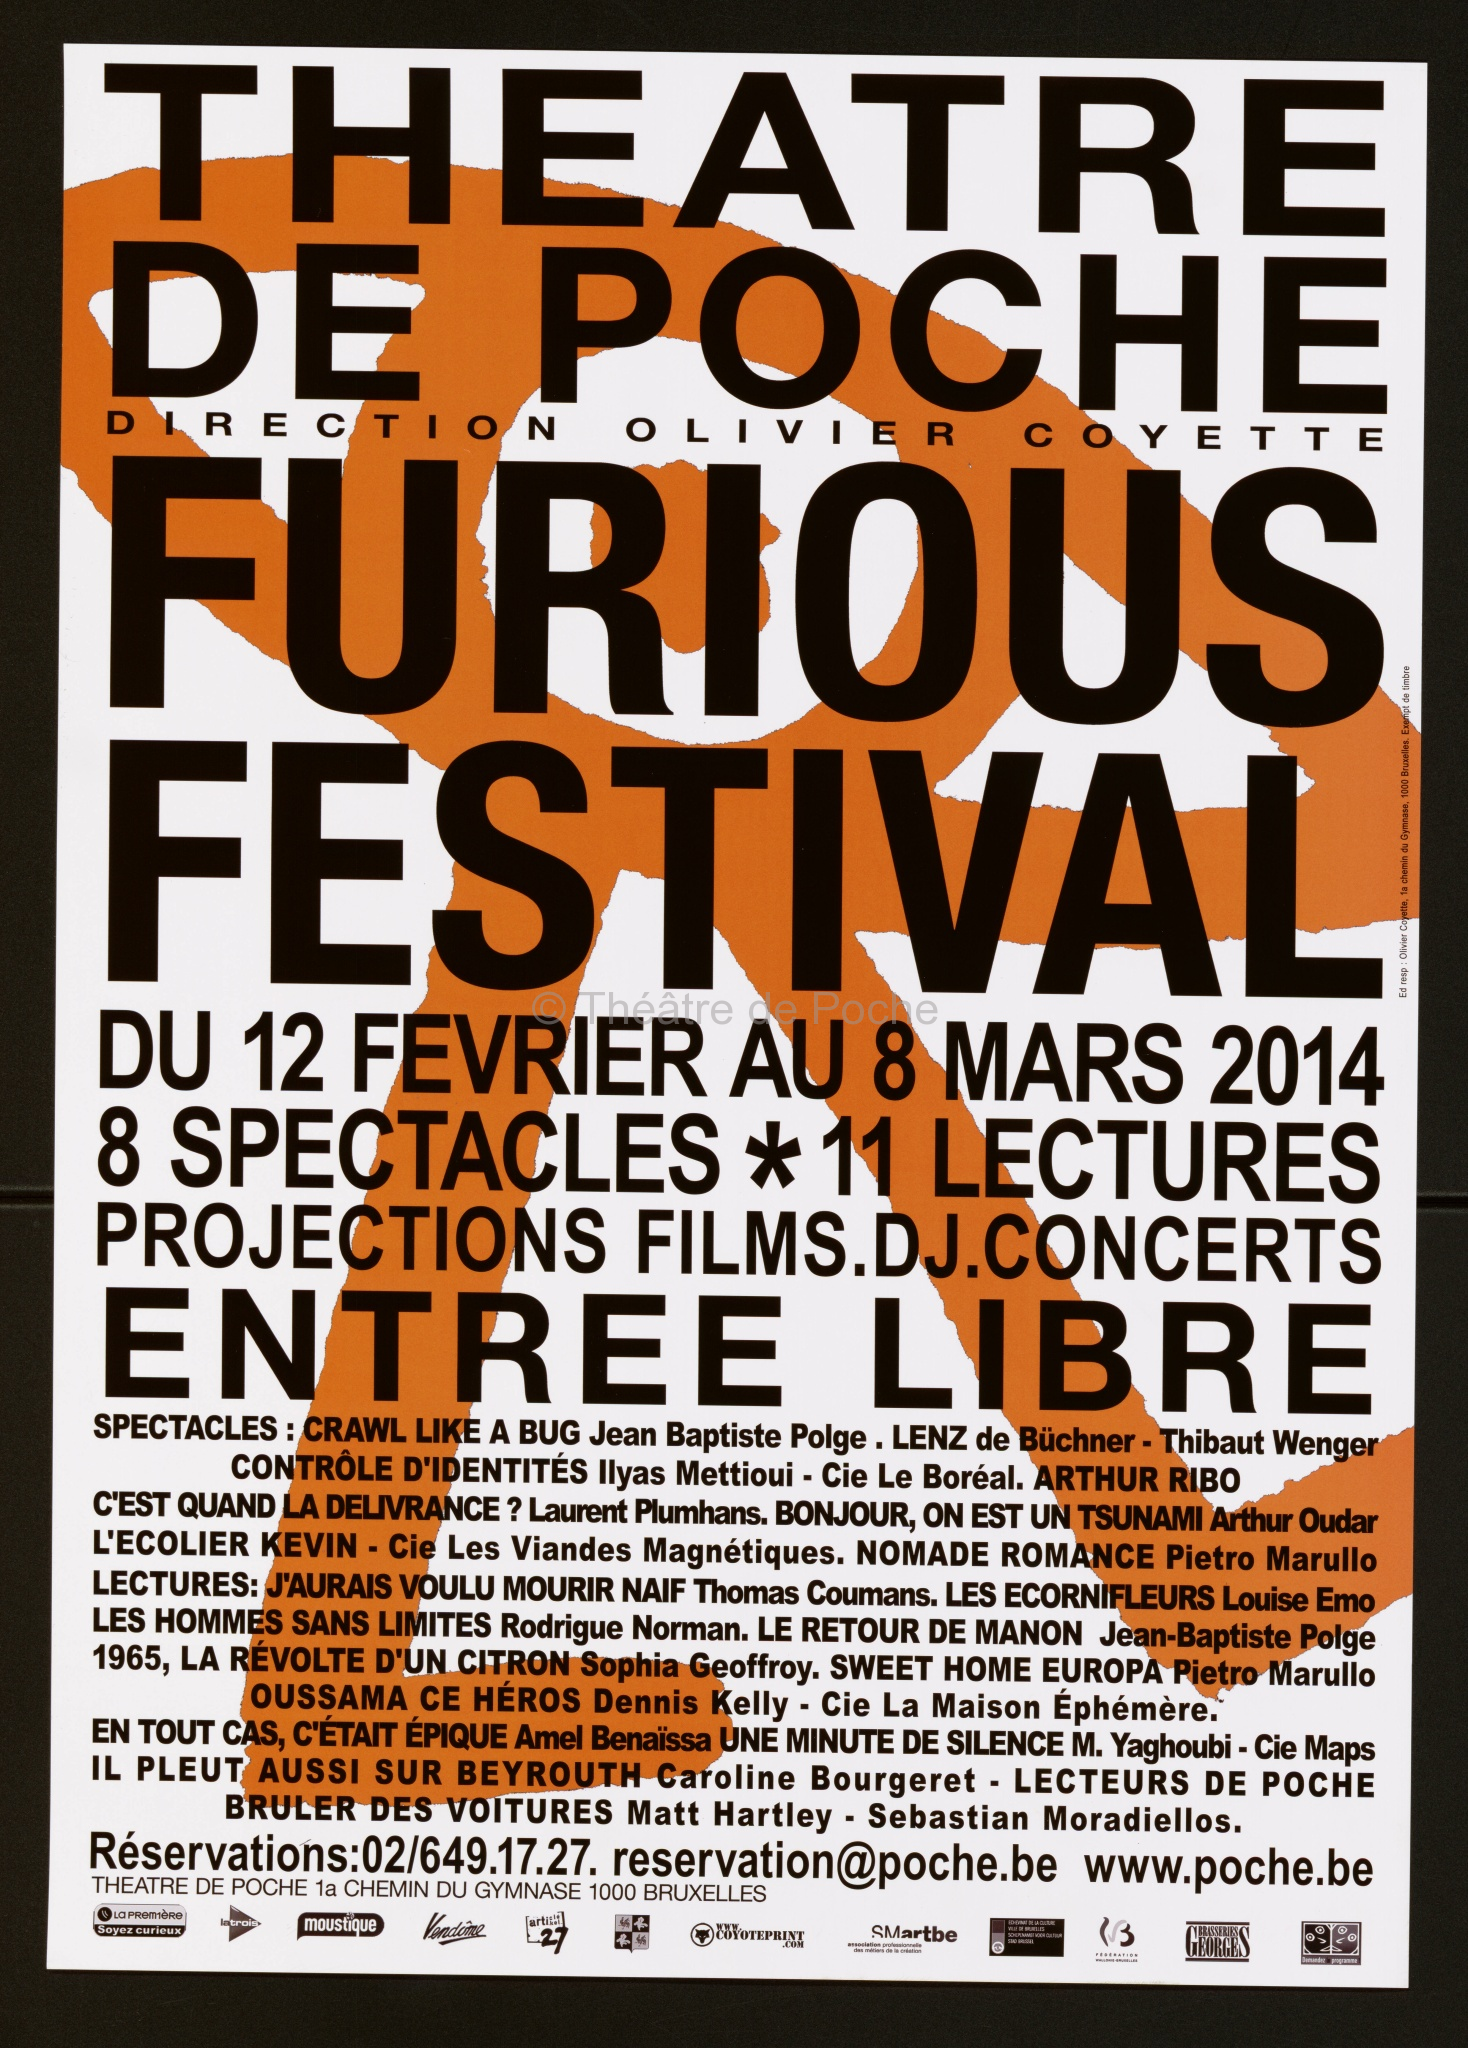 Affiche - Furious Festival